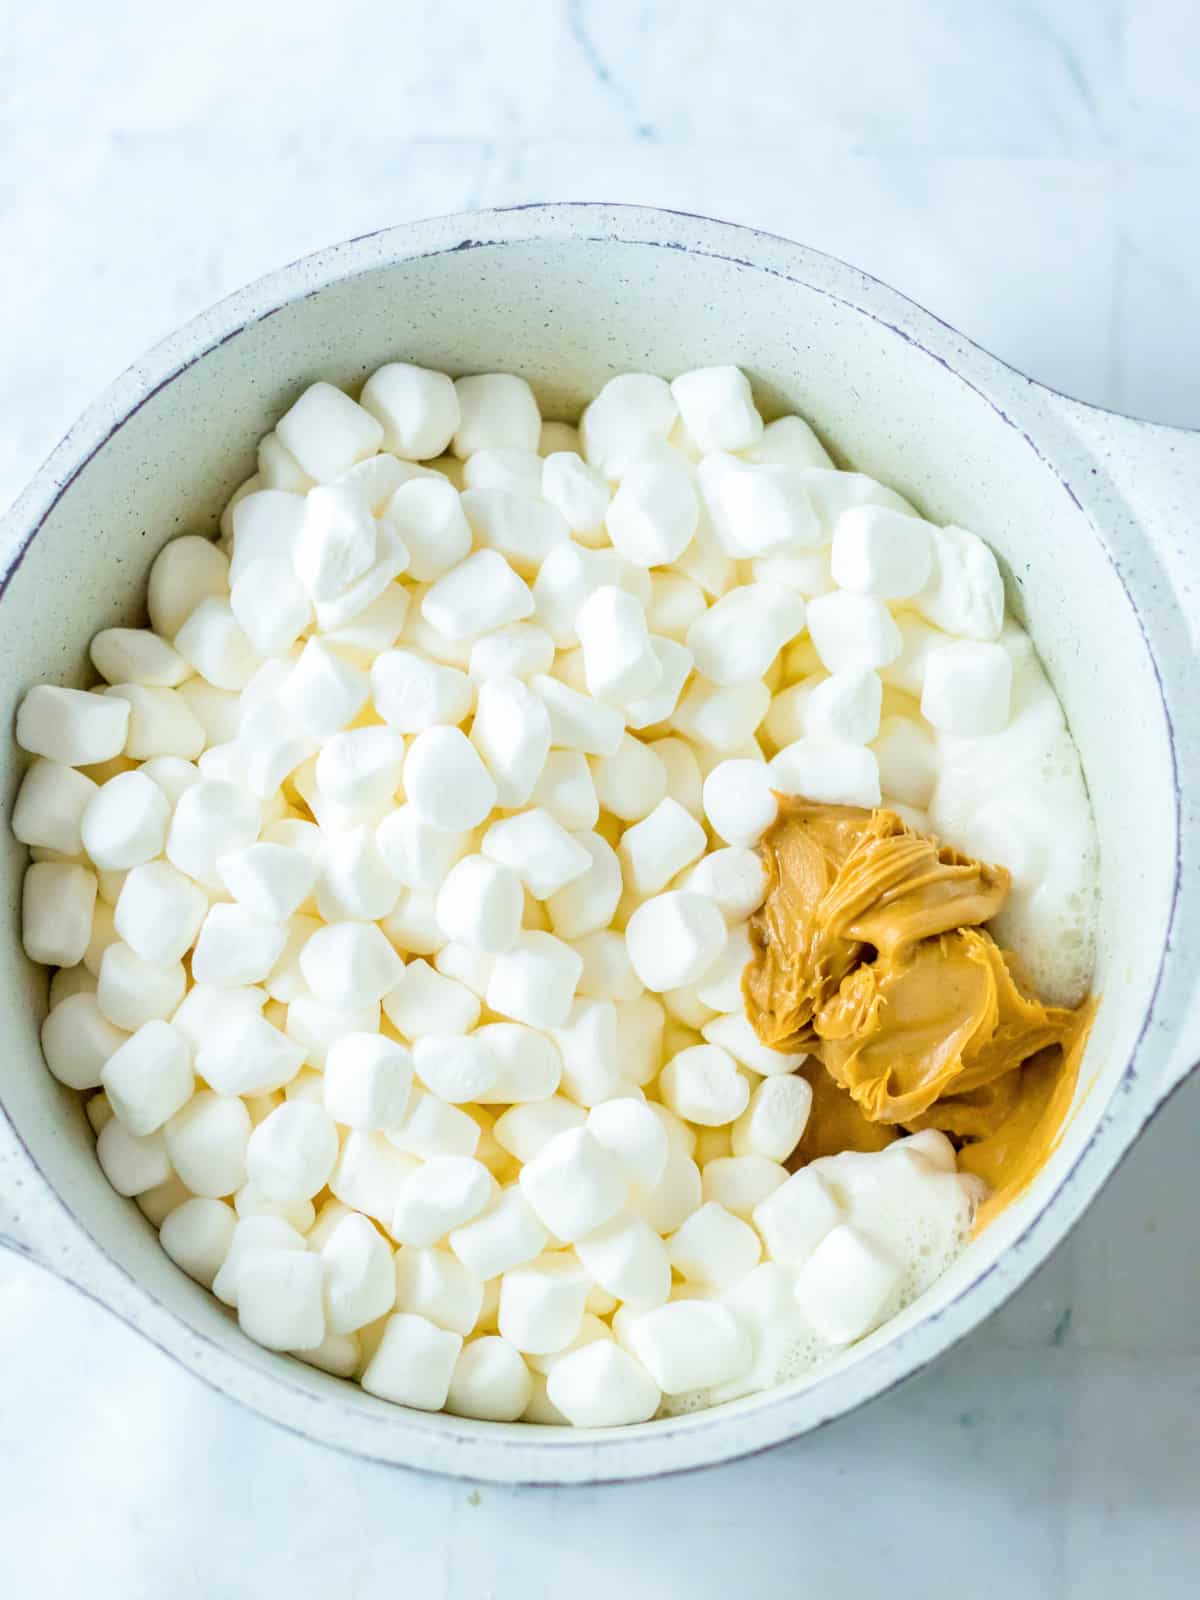 melt marshmallows with peanut butter